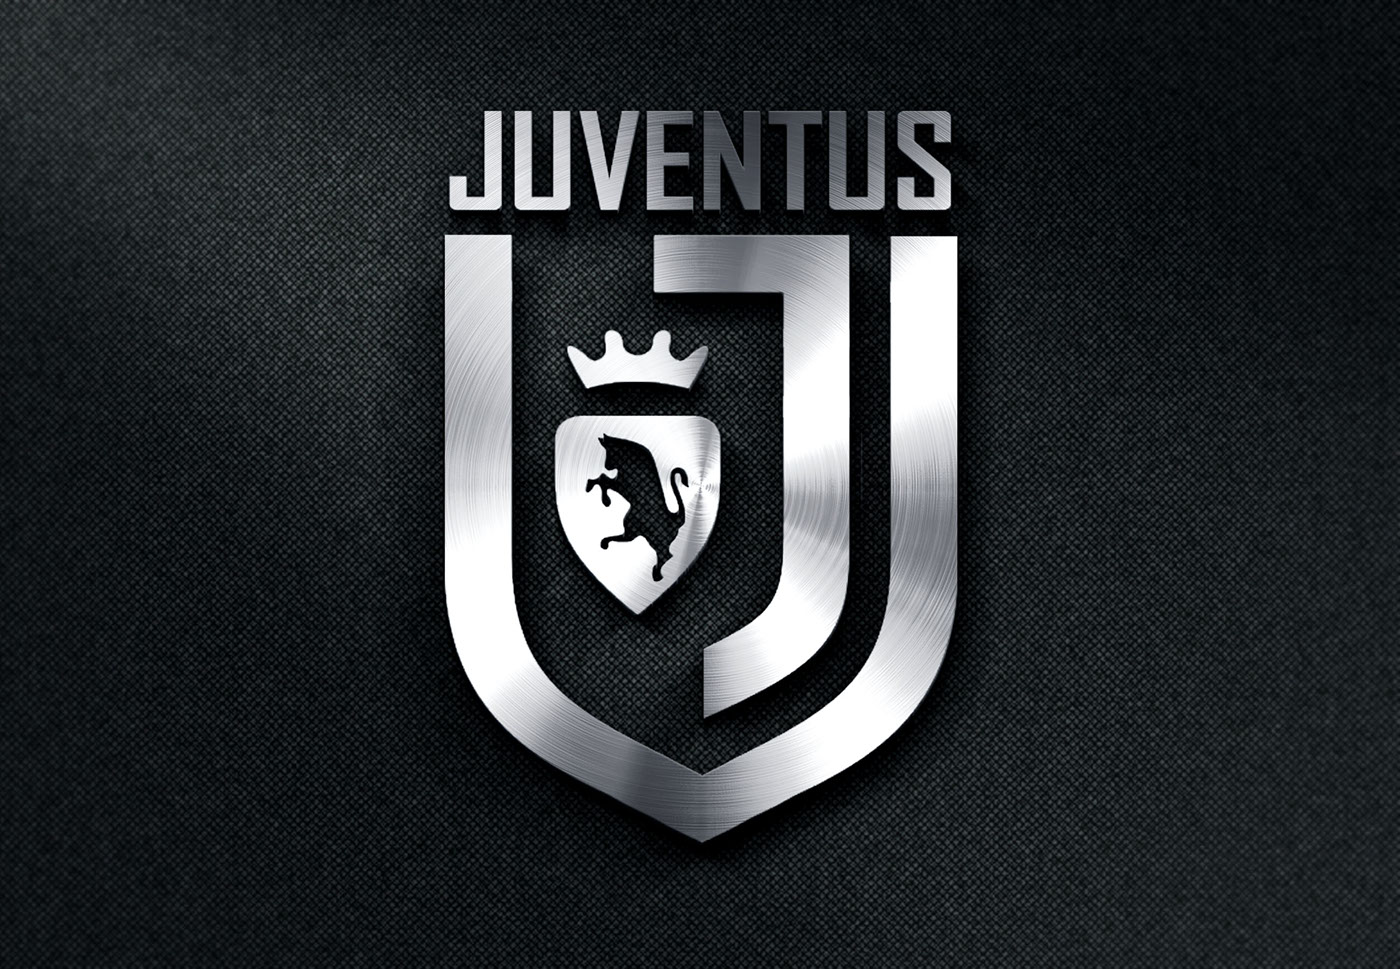 Juventus Football Club new logo & brand proposal. on Behance